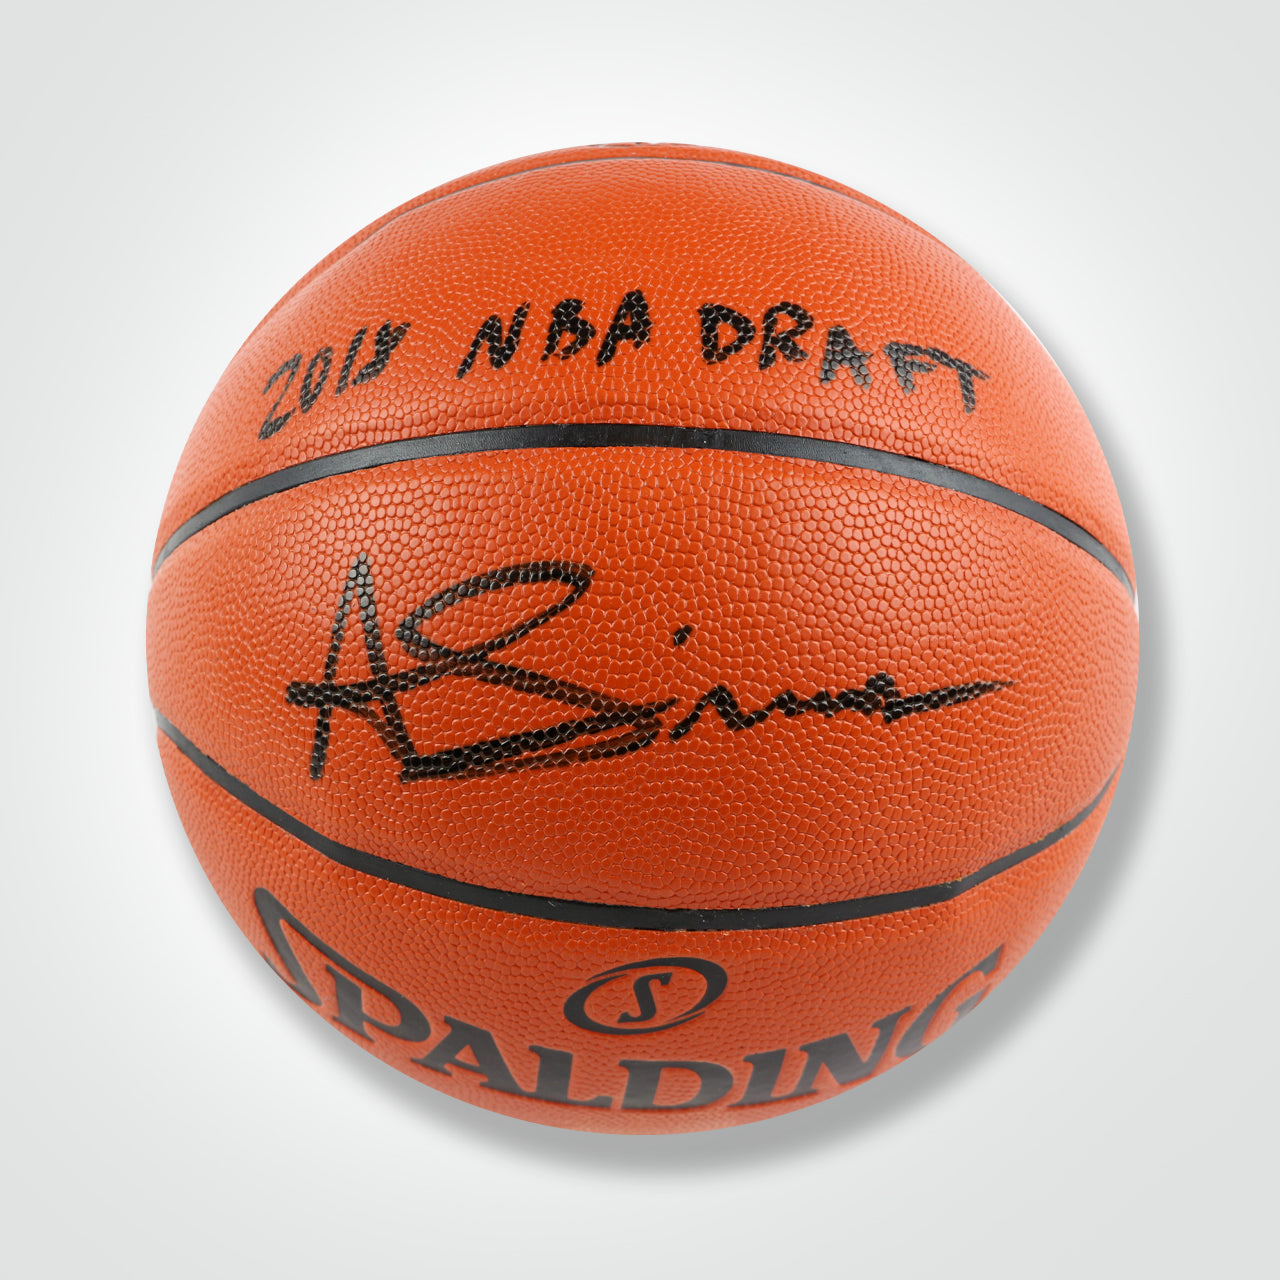 Anfernee Simons Signed Spalding Basketball Inscribed "2018 NBA Draft"